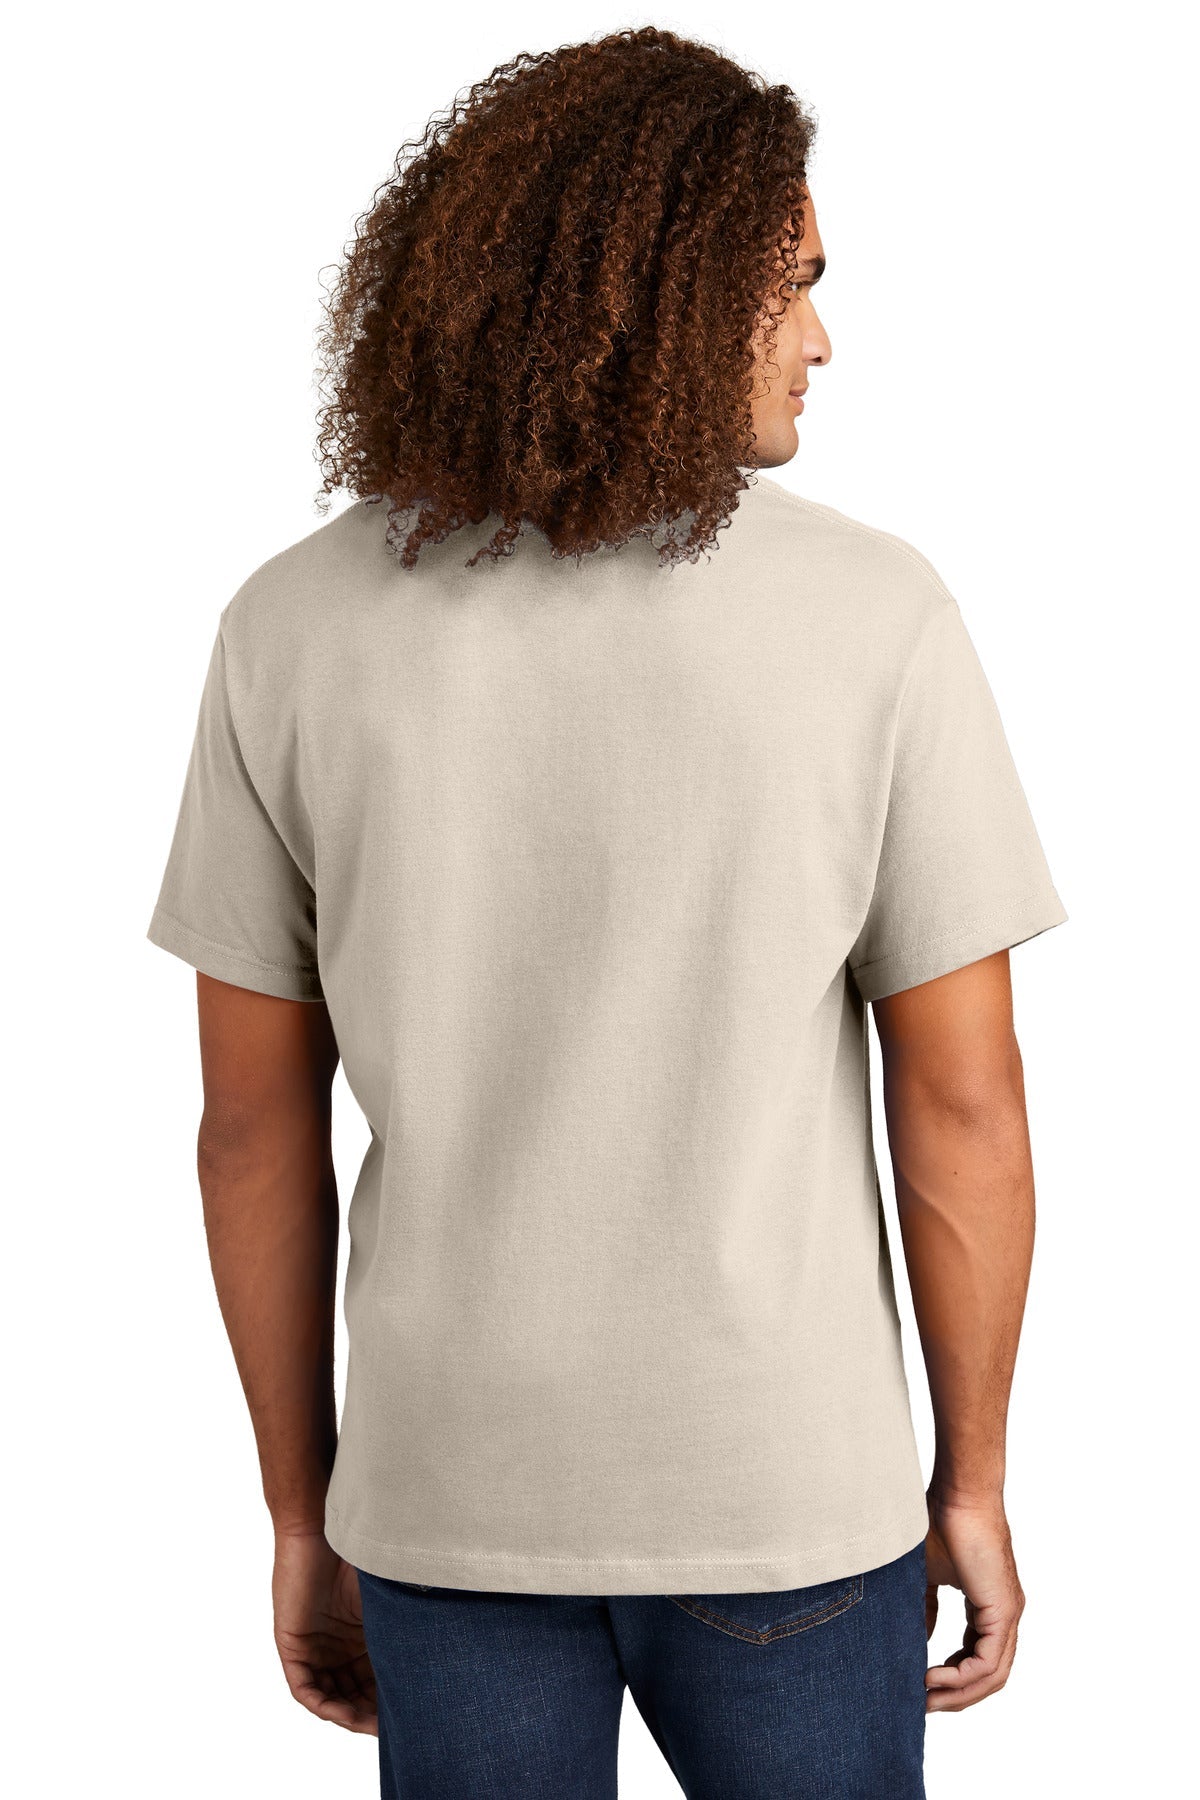 American Apparel® Relaxed T-Shirt 1301W [Cream] - DFW Impression